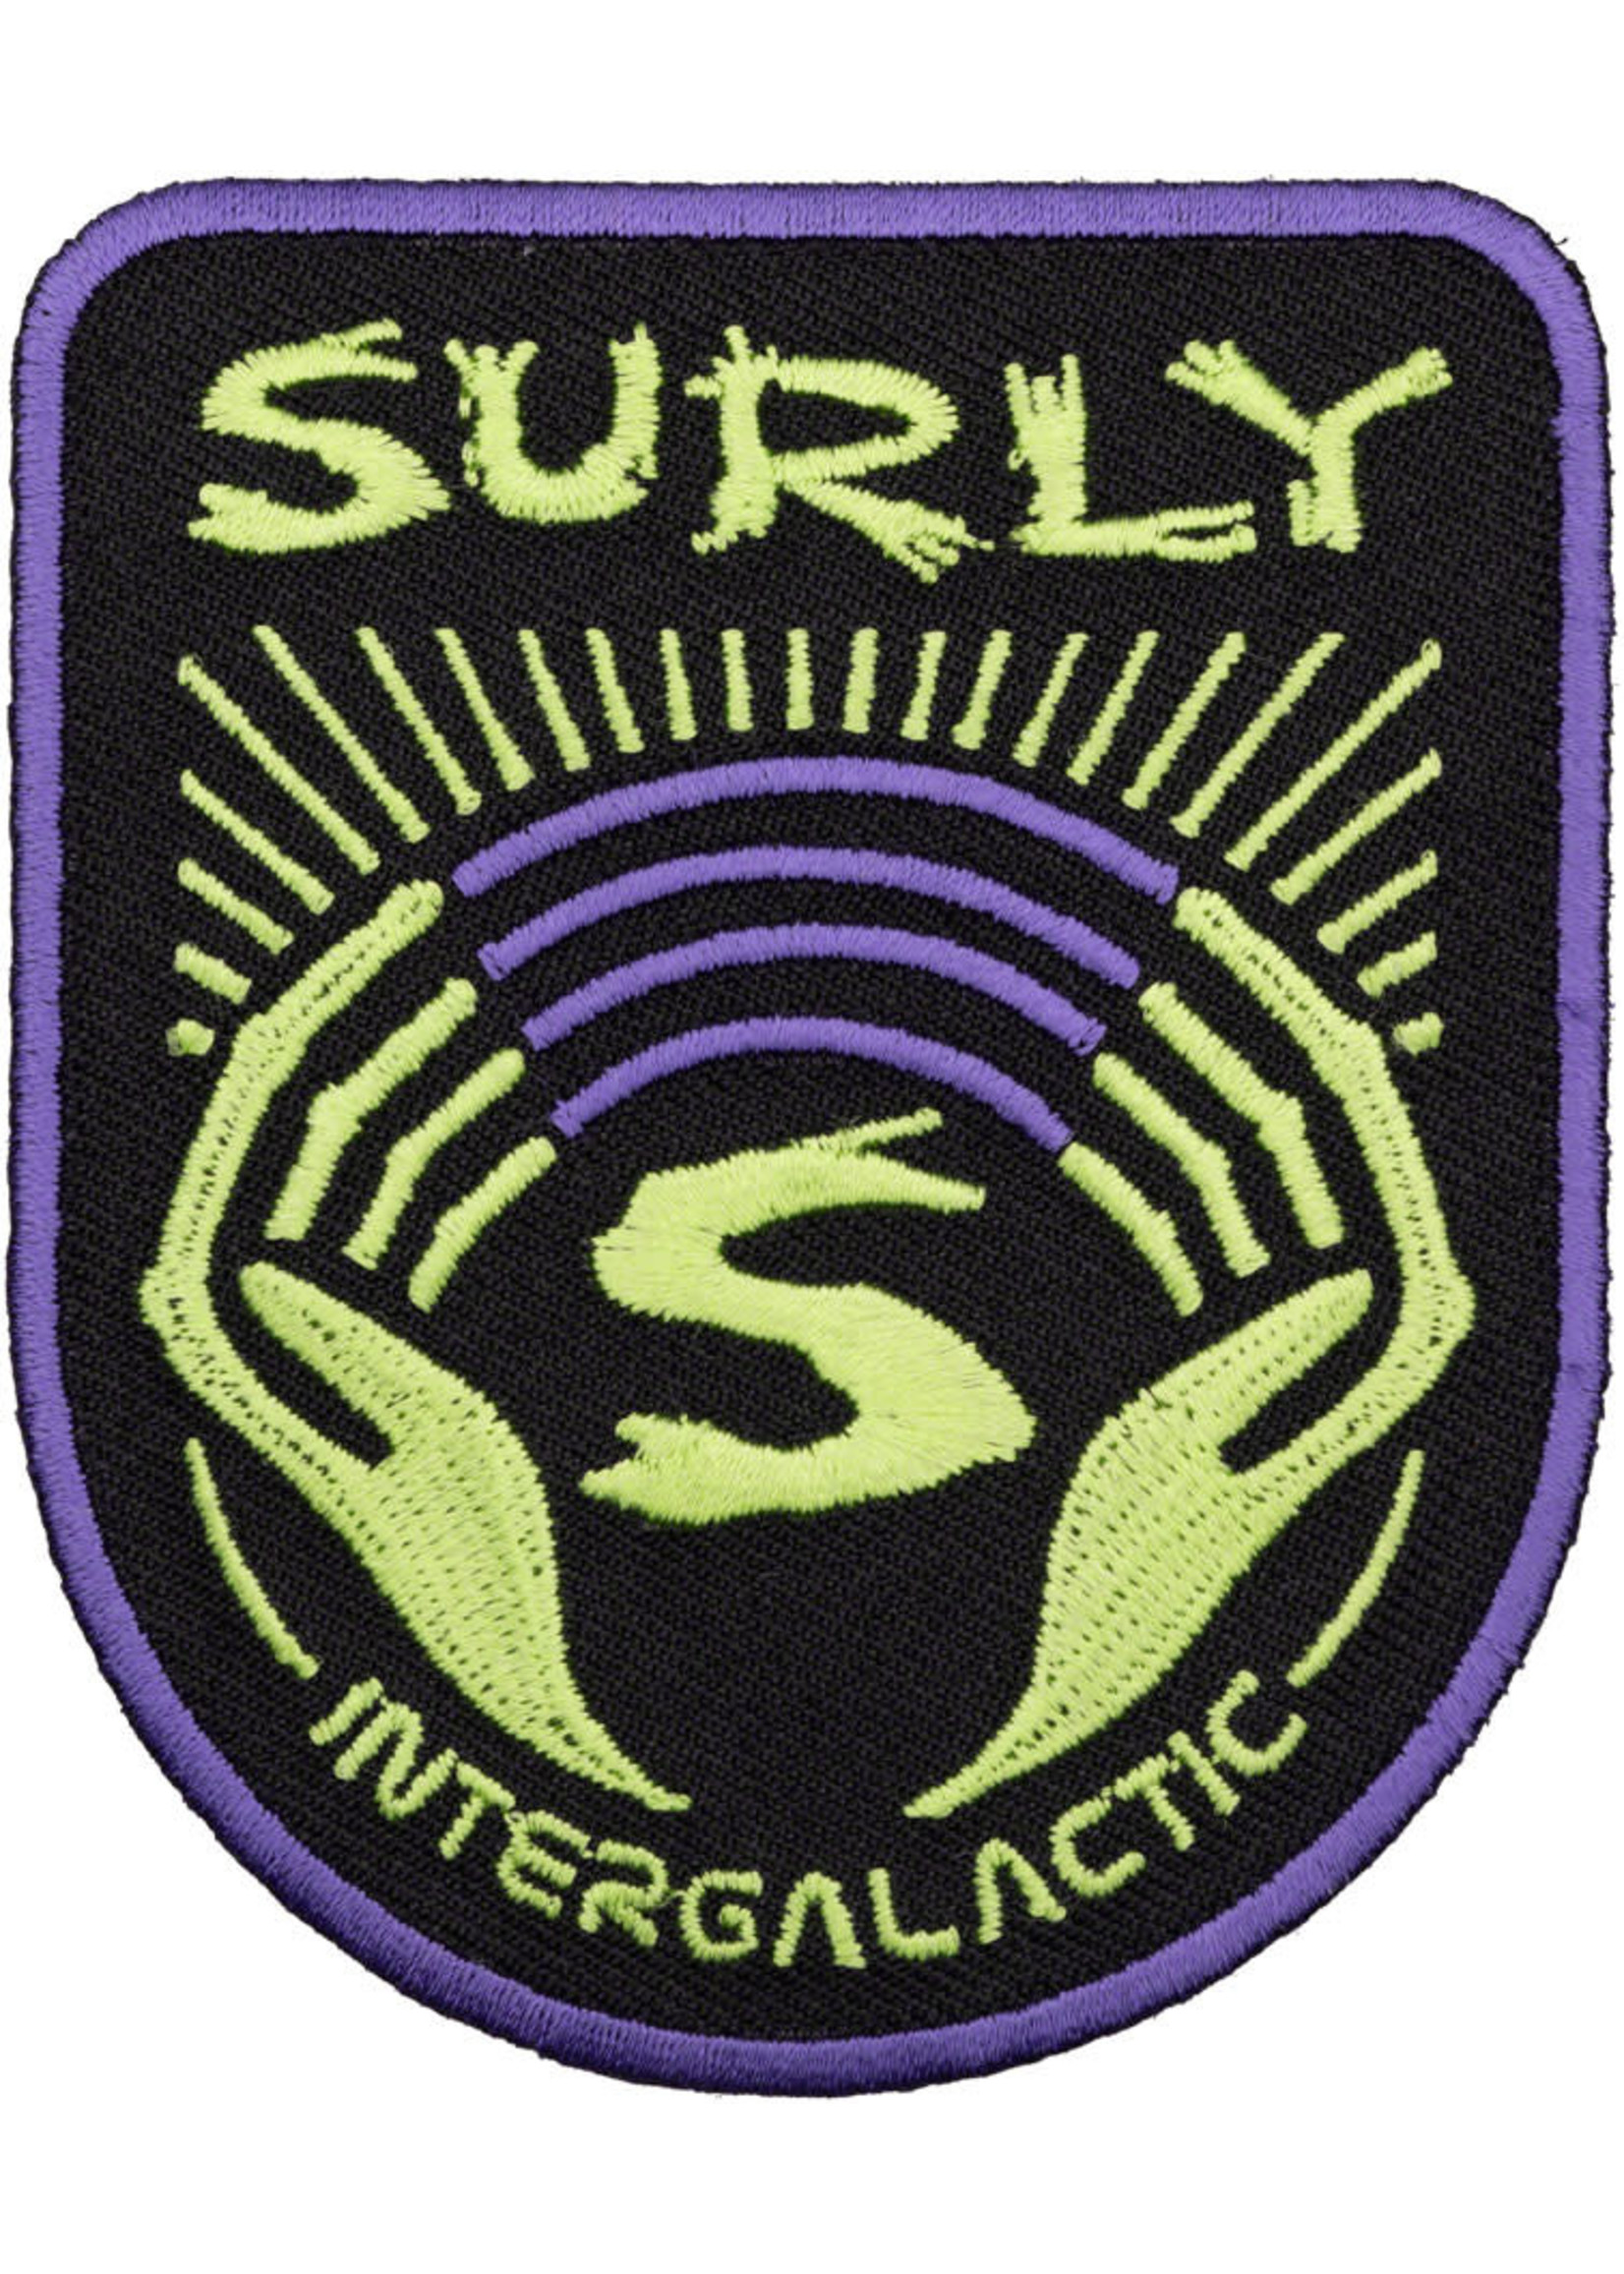 Surly Surly Intergalactic Patch: Black/Purple/Green